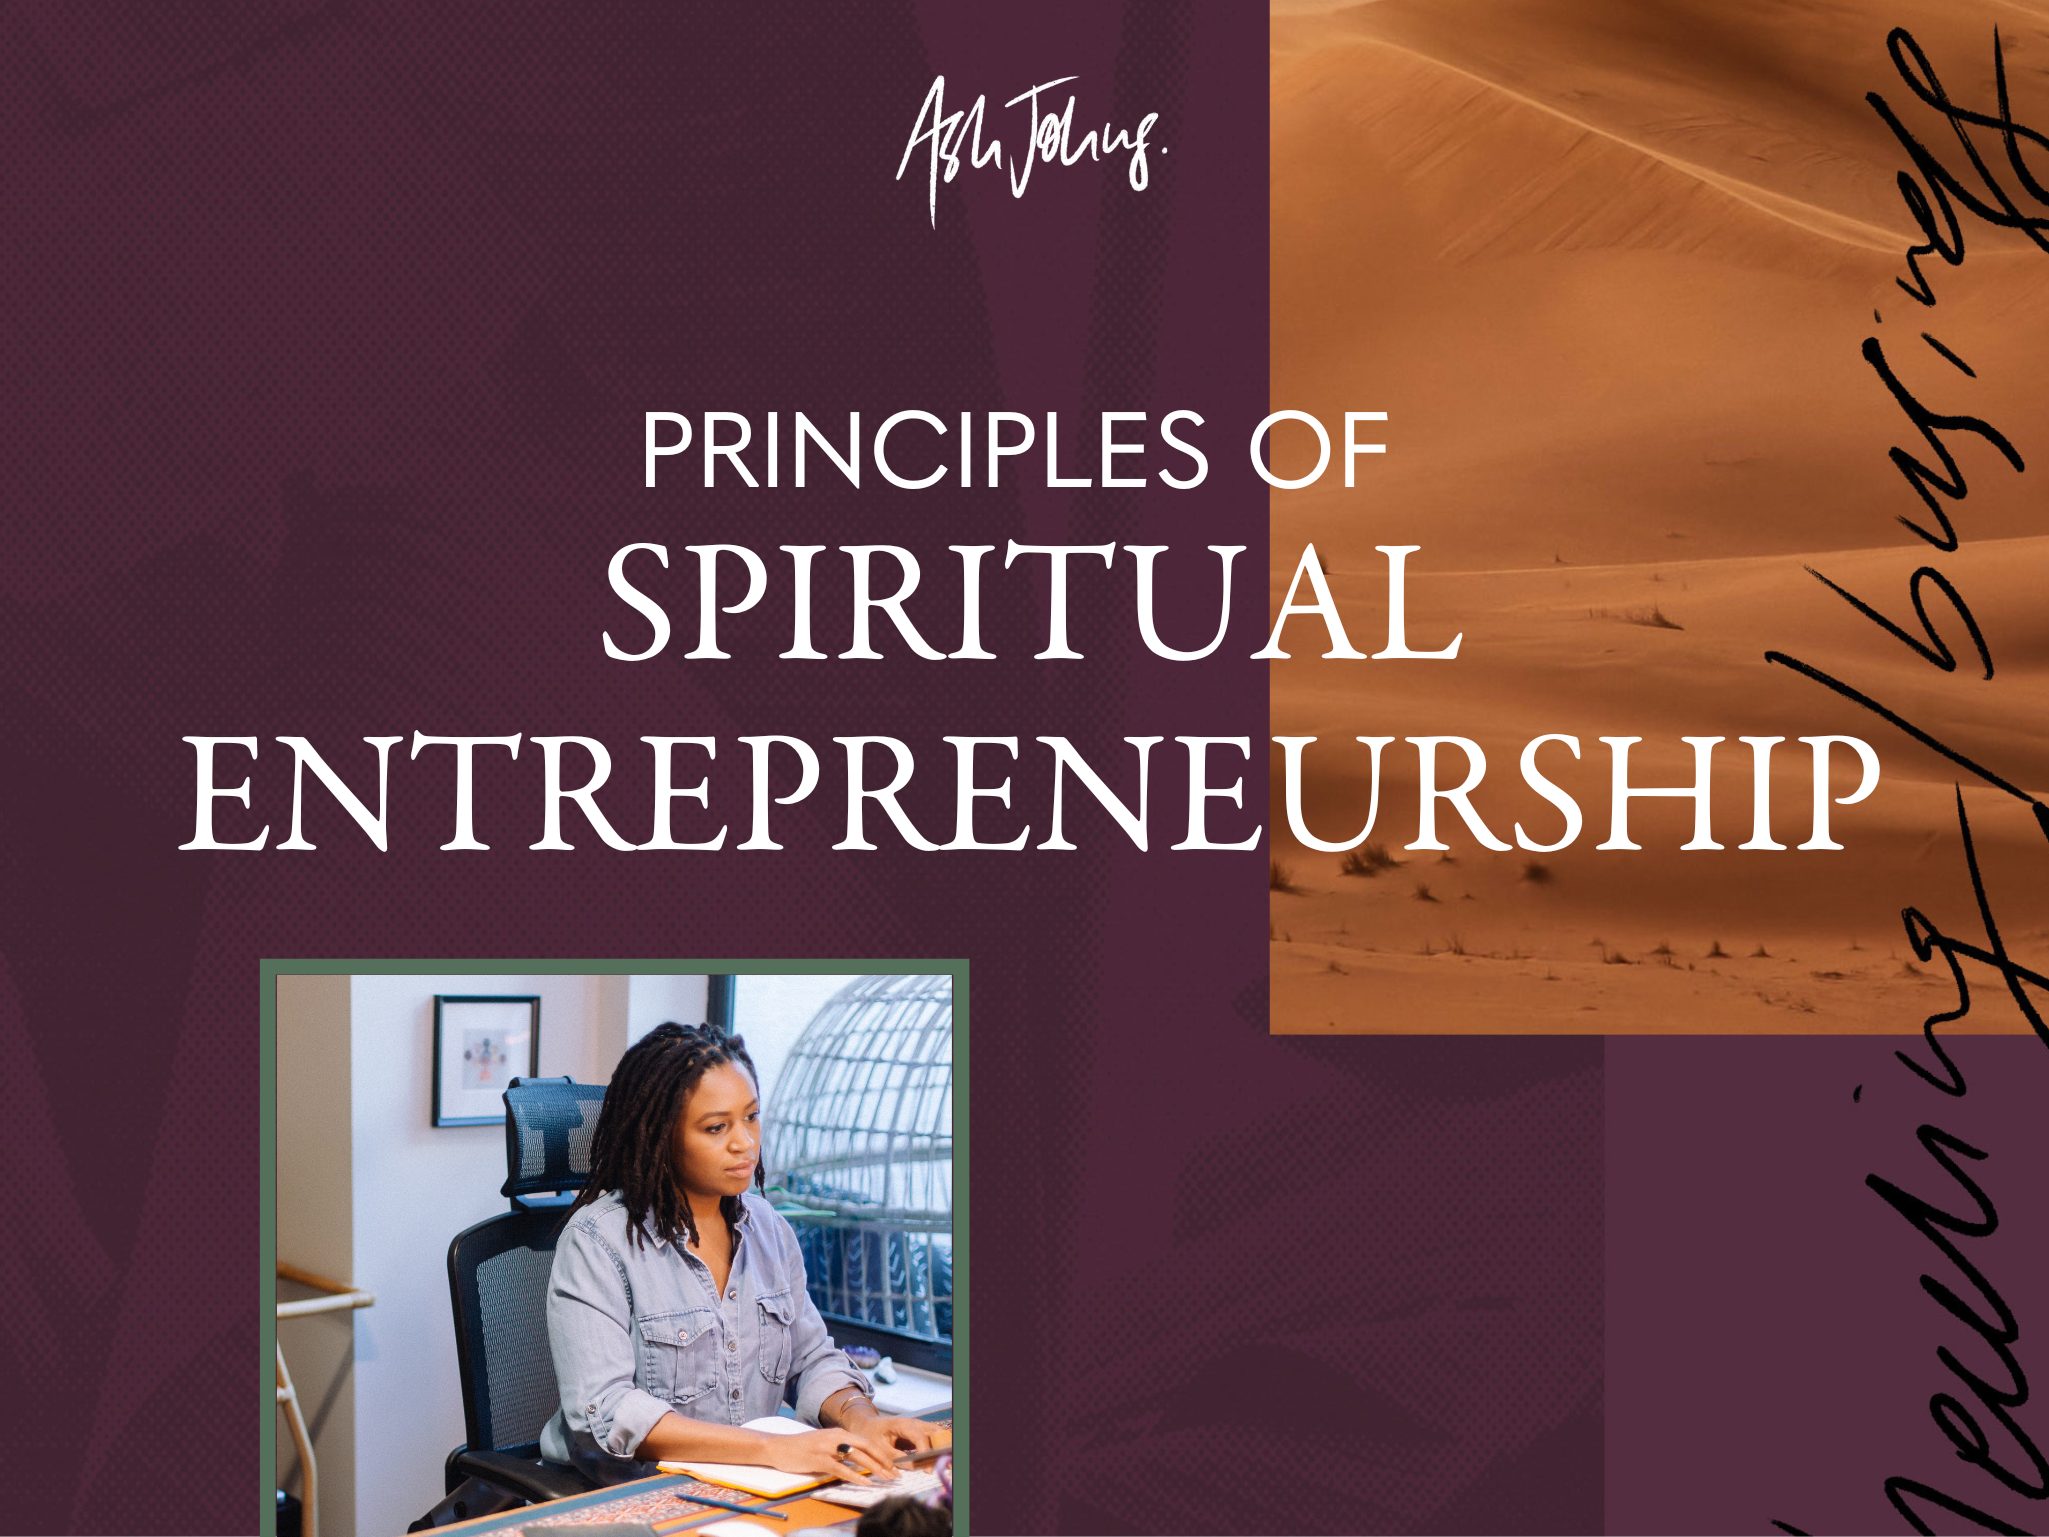 principles of spiritual entrepreneurship_ash johns.png